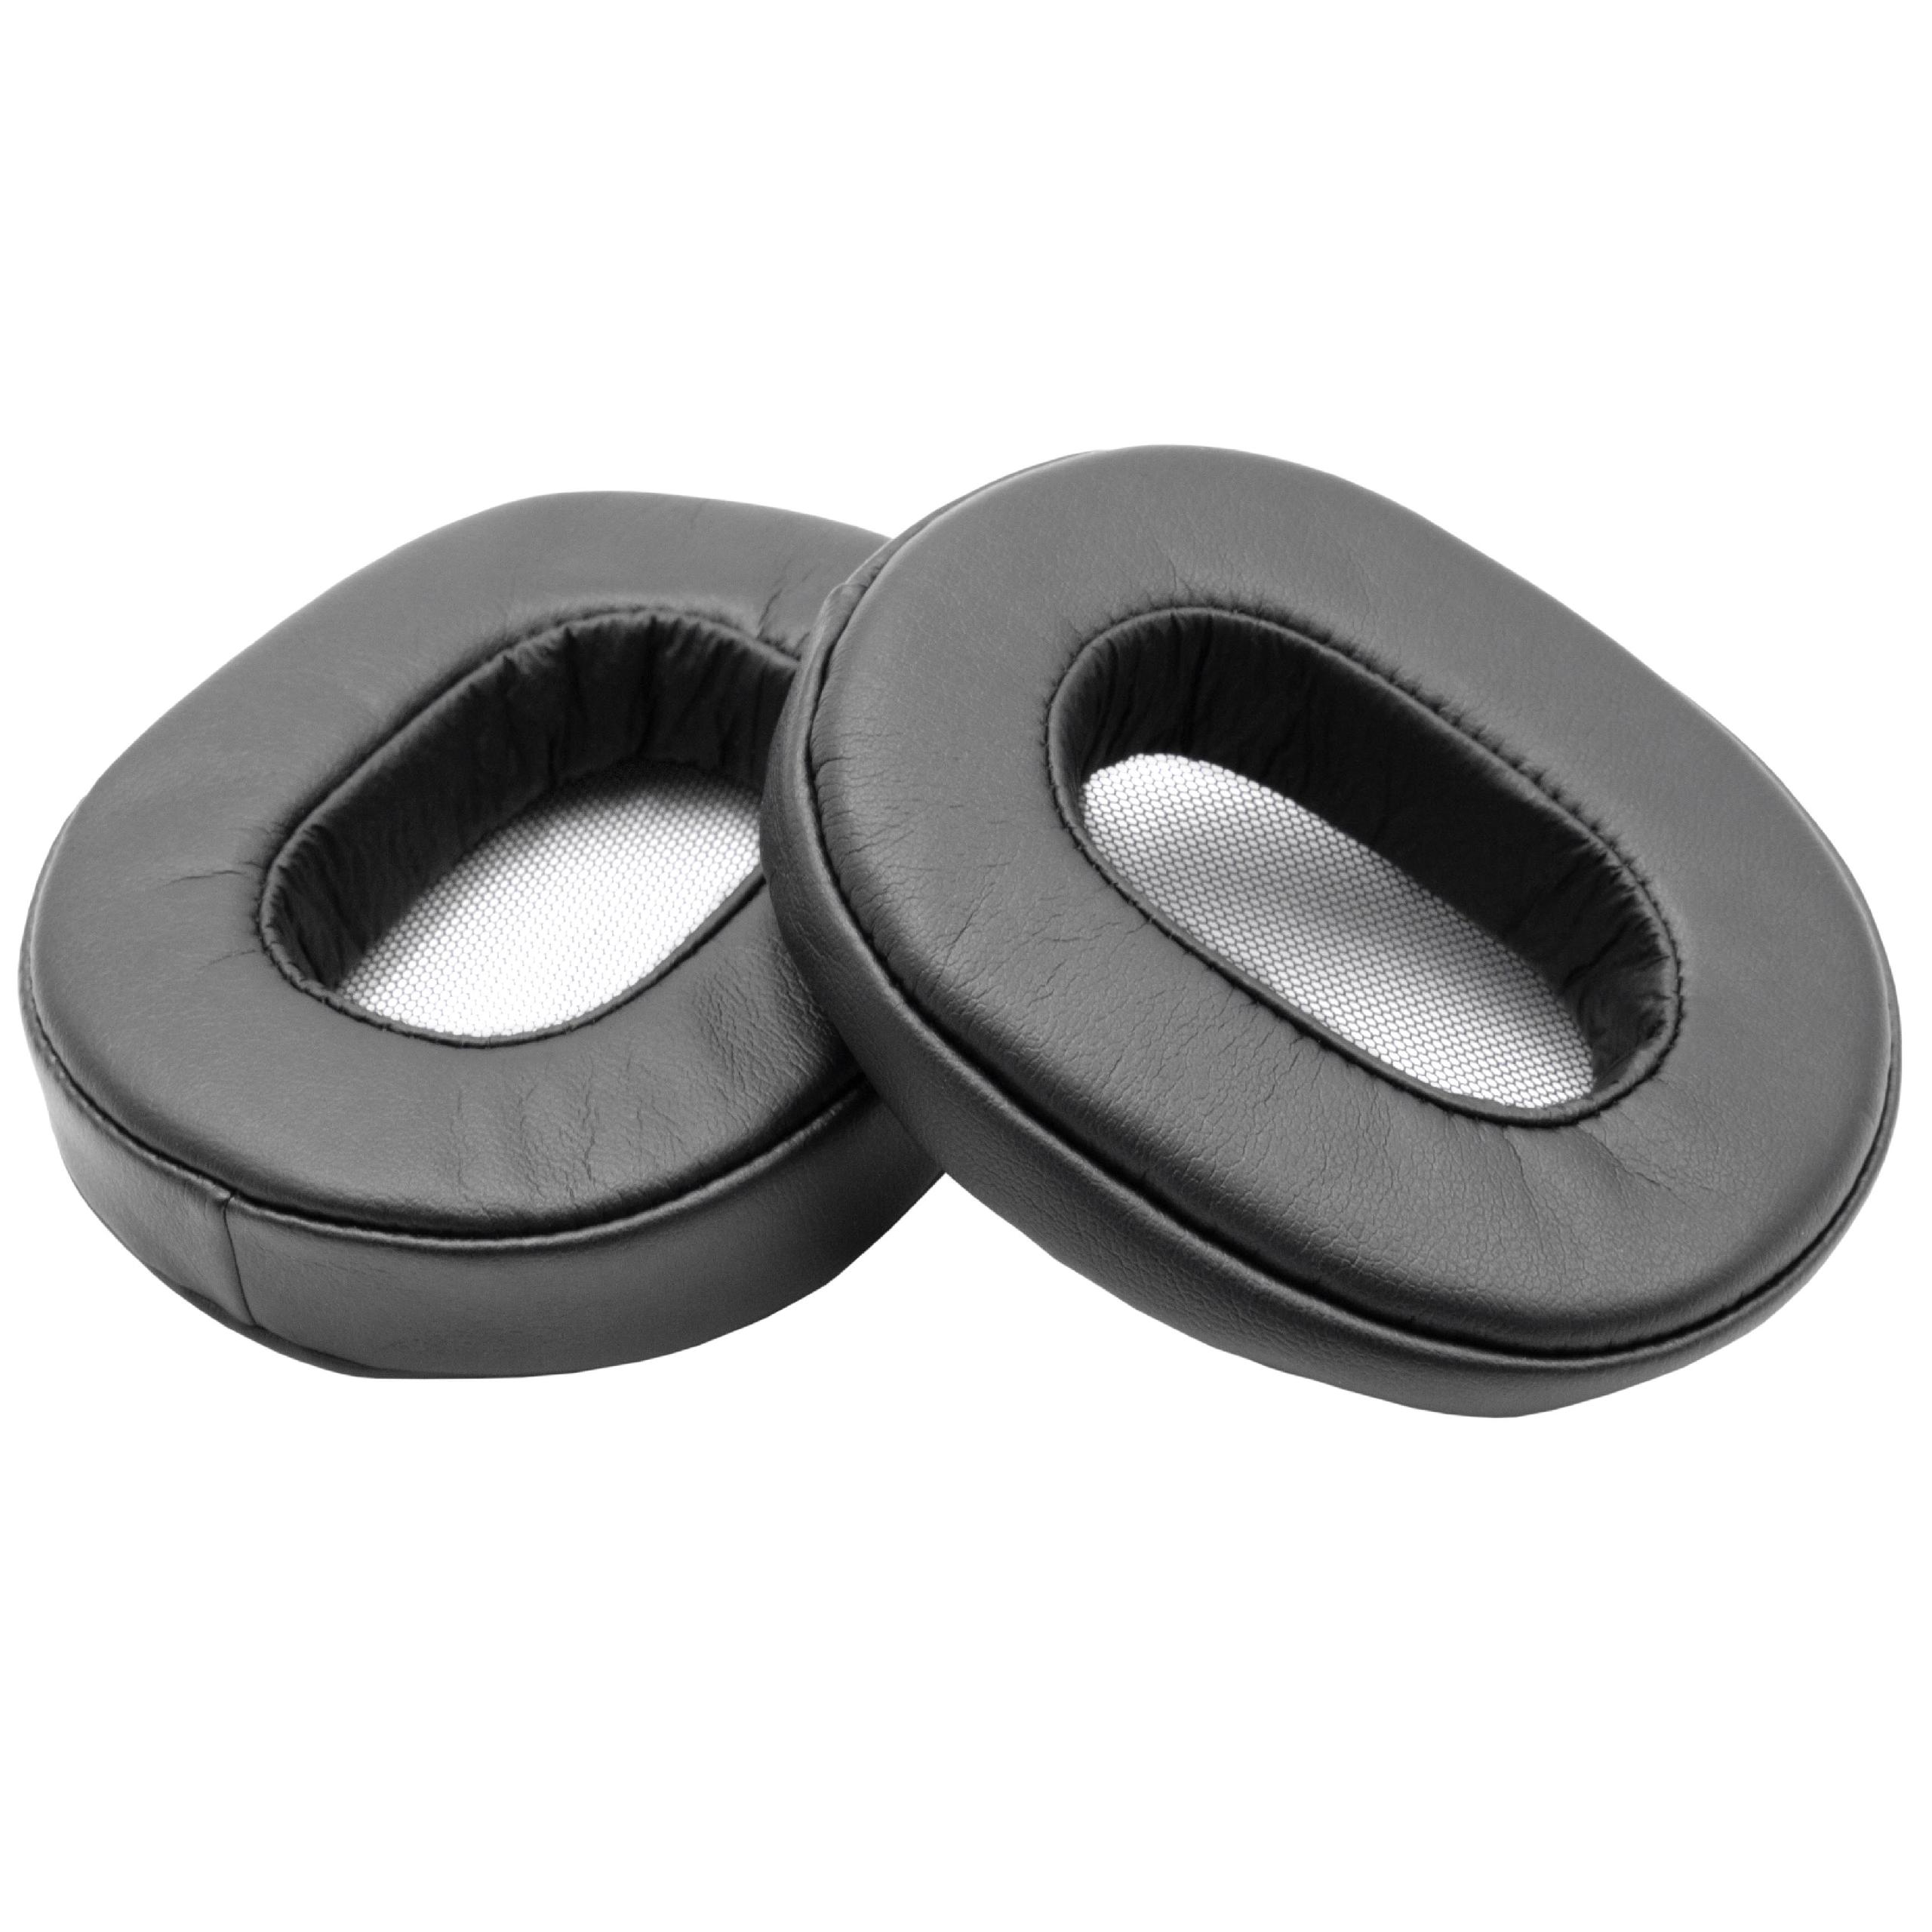 1 paio di cuscinetti per Sony MDR-1A cuffie ecc. - poliuretano / gommapiuma, 9,4 x 7,6 cm, 20 mm spessore, ner